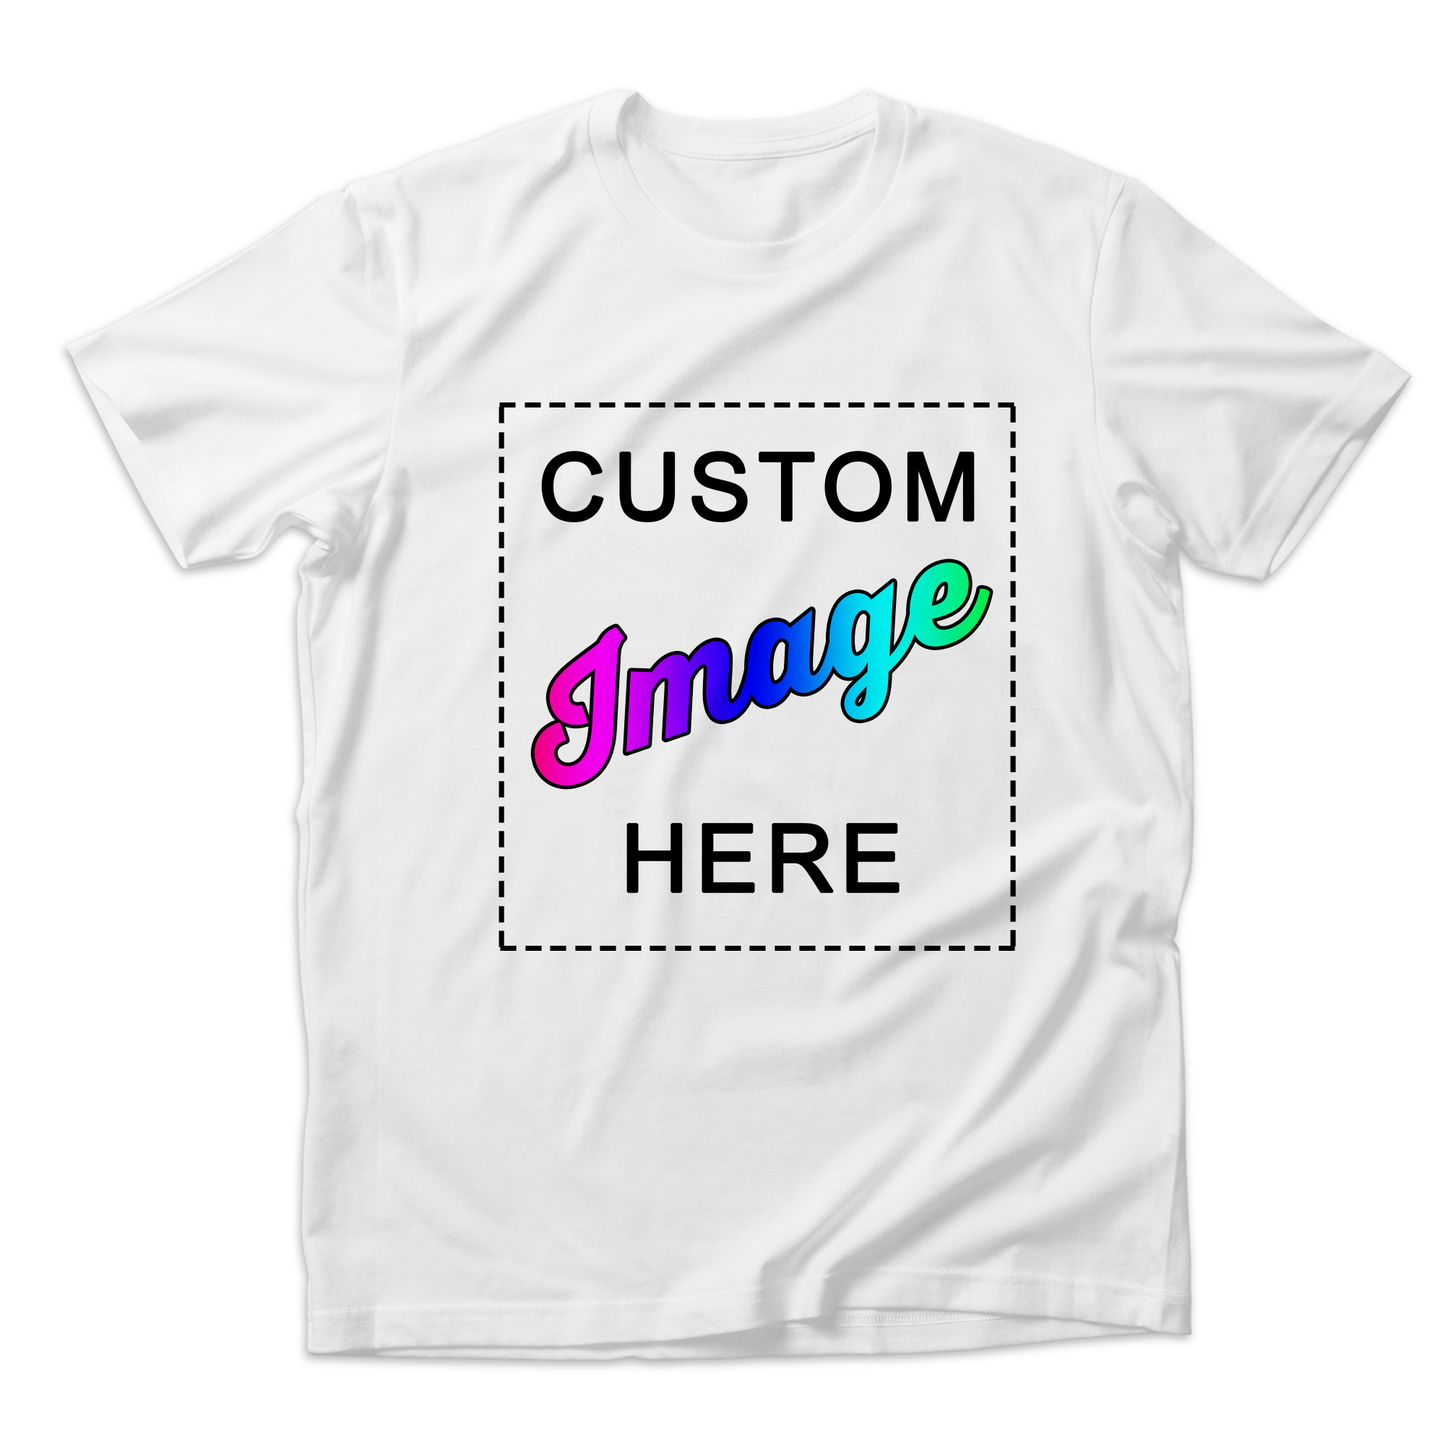 [Custom Image] Men T-shirt for Dad - Short Sleeve